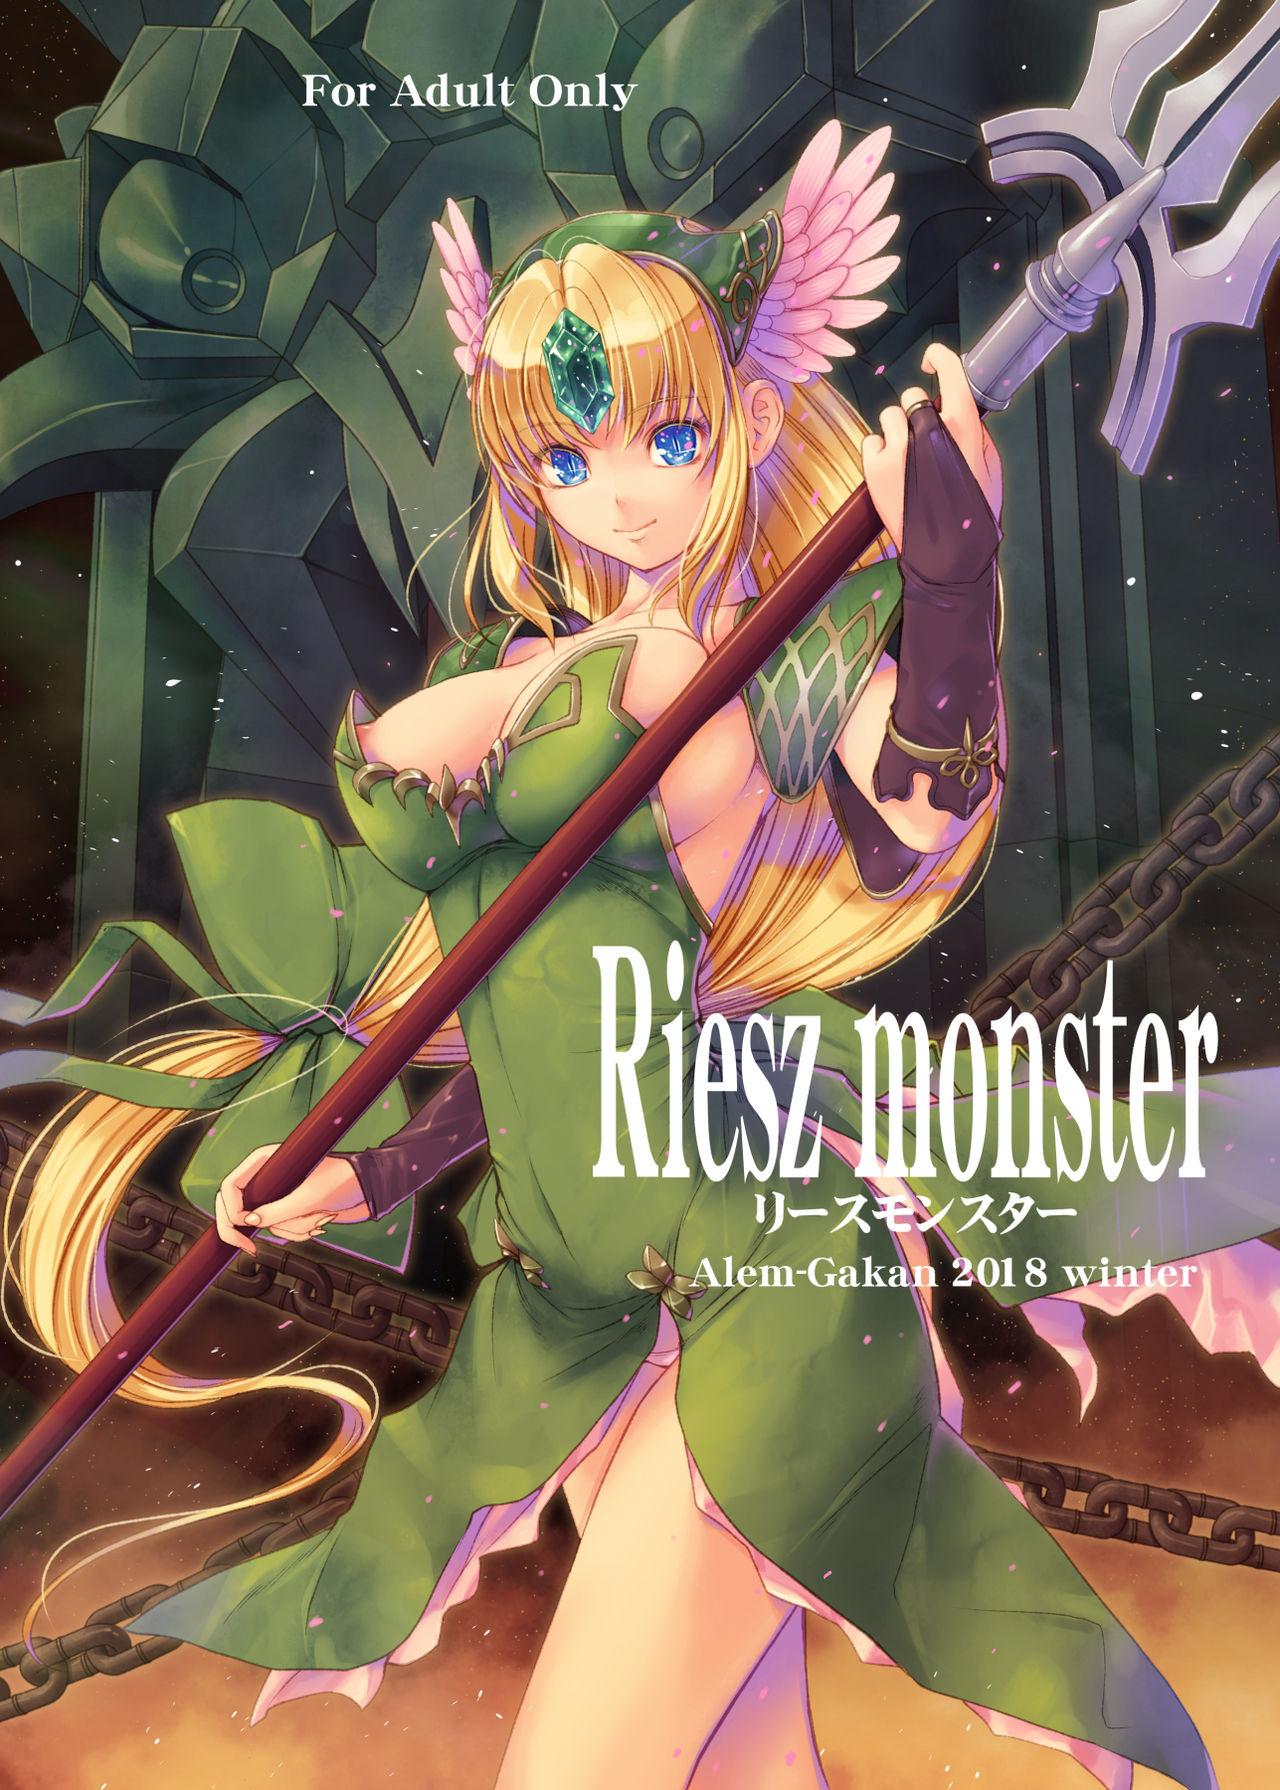 Teacher Riesz monster - Seiken densetsu 3 Softcore - Picture 1